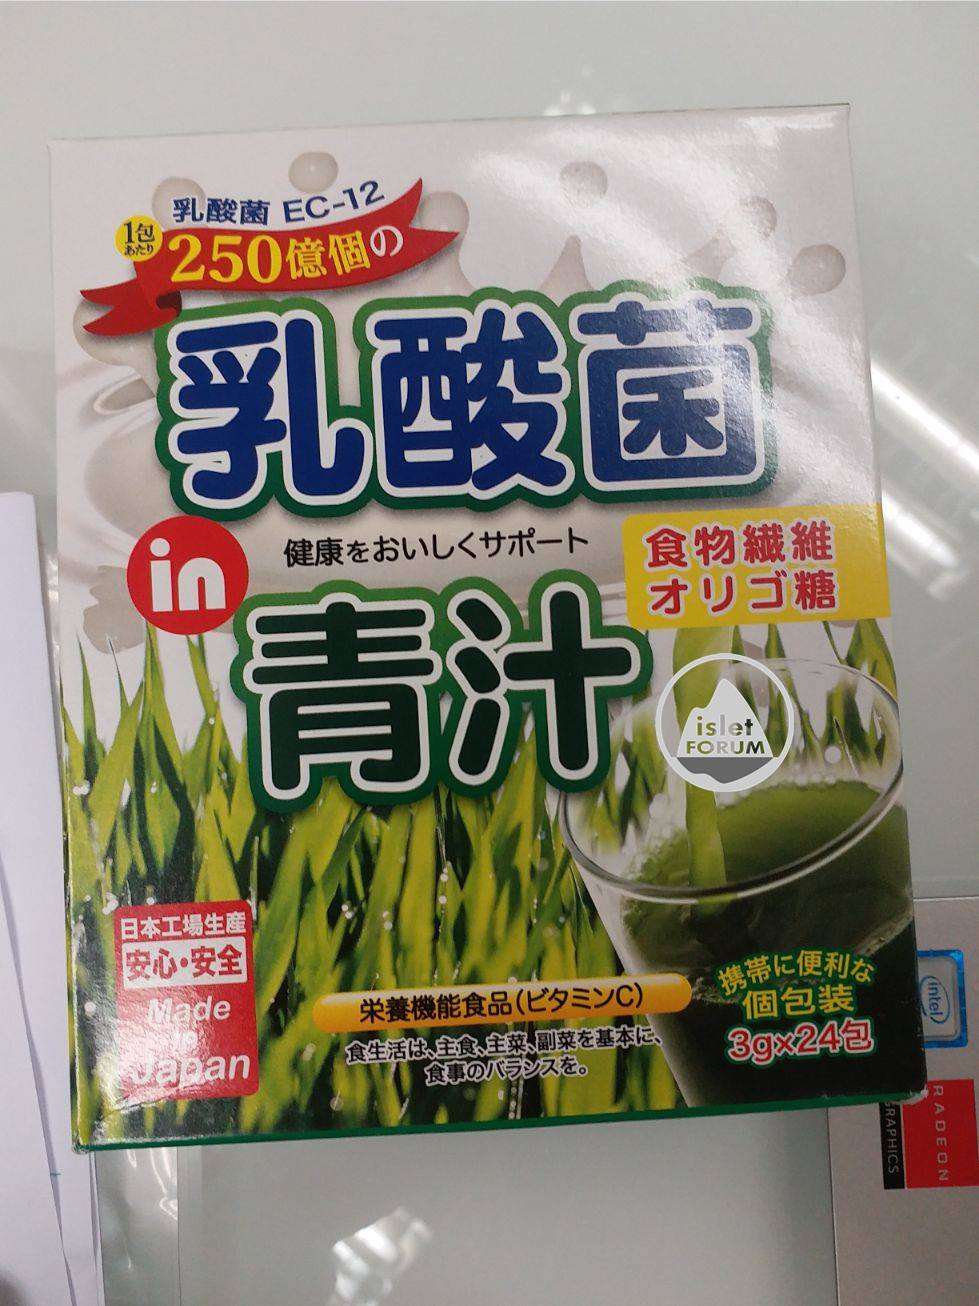 JG 乳酸菌青汁 3g (24包) Green Juice with Lactic Acid (2).jpg